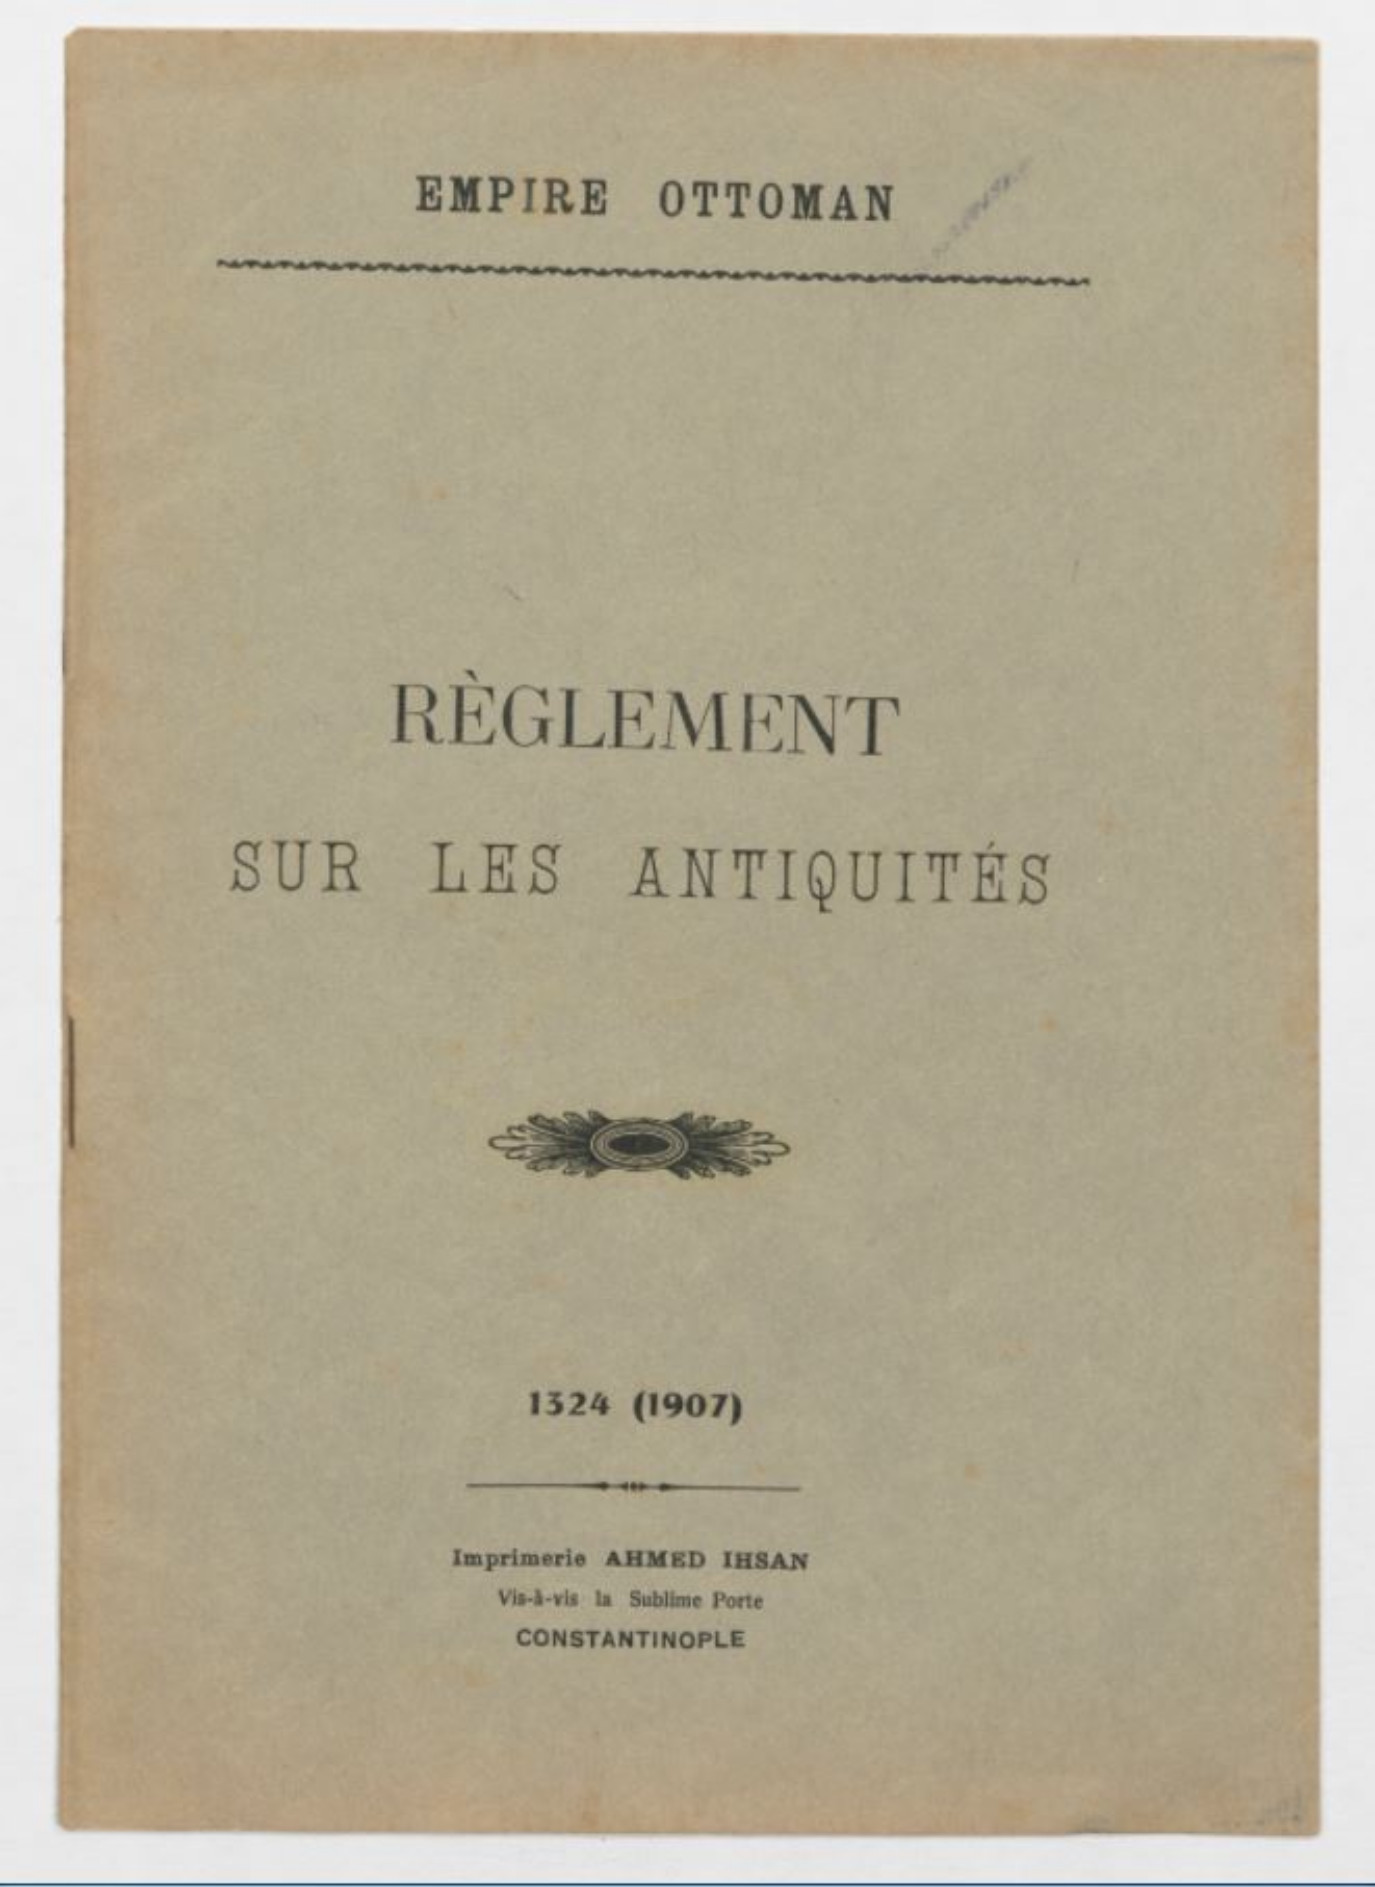 Publication of the Antiquities Act of 1906 in French Quelle: Règlement sur les Antiquités (Constantinople 1907), Bibliothek ISL